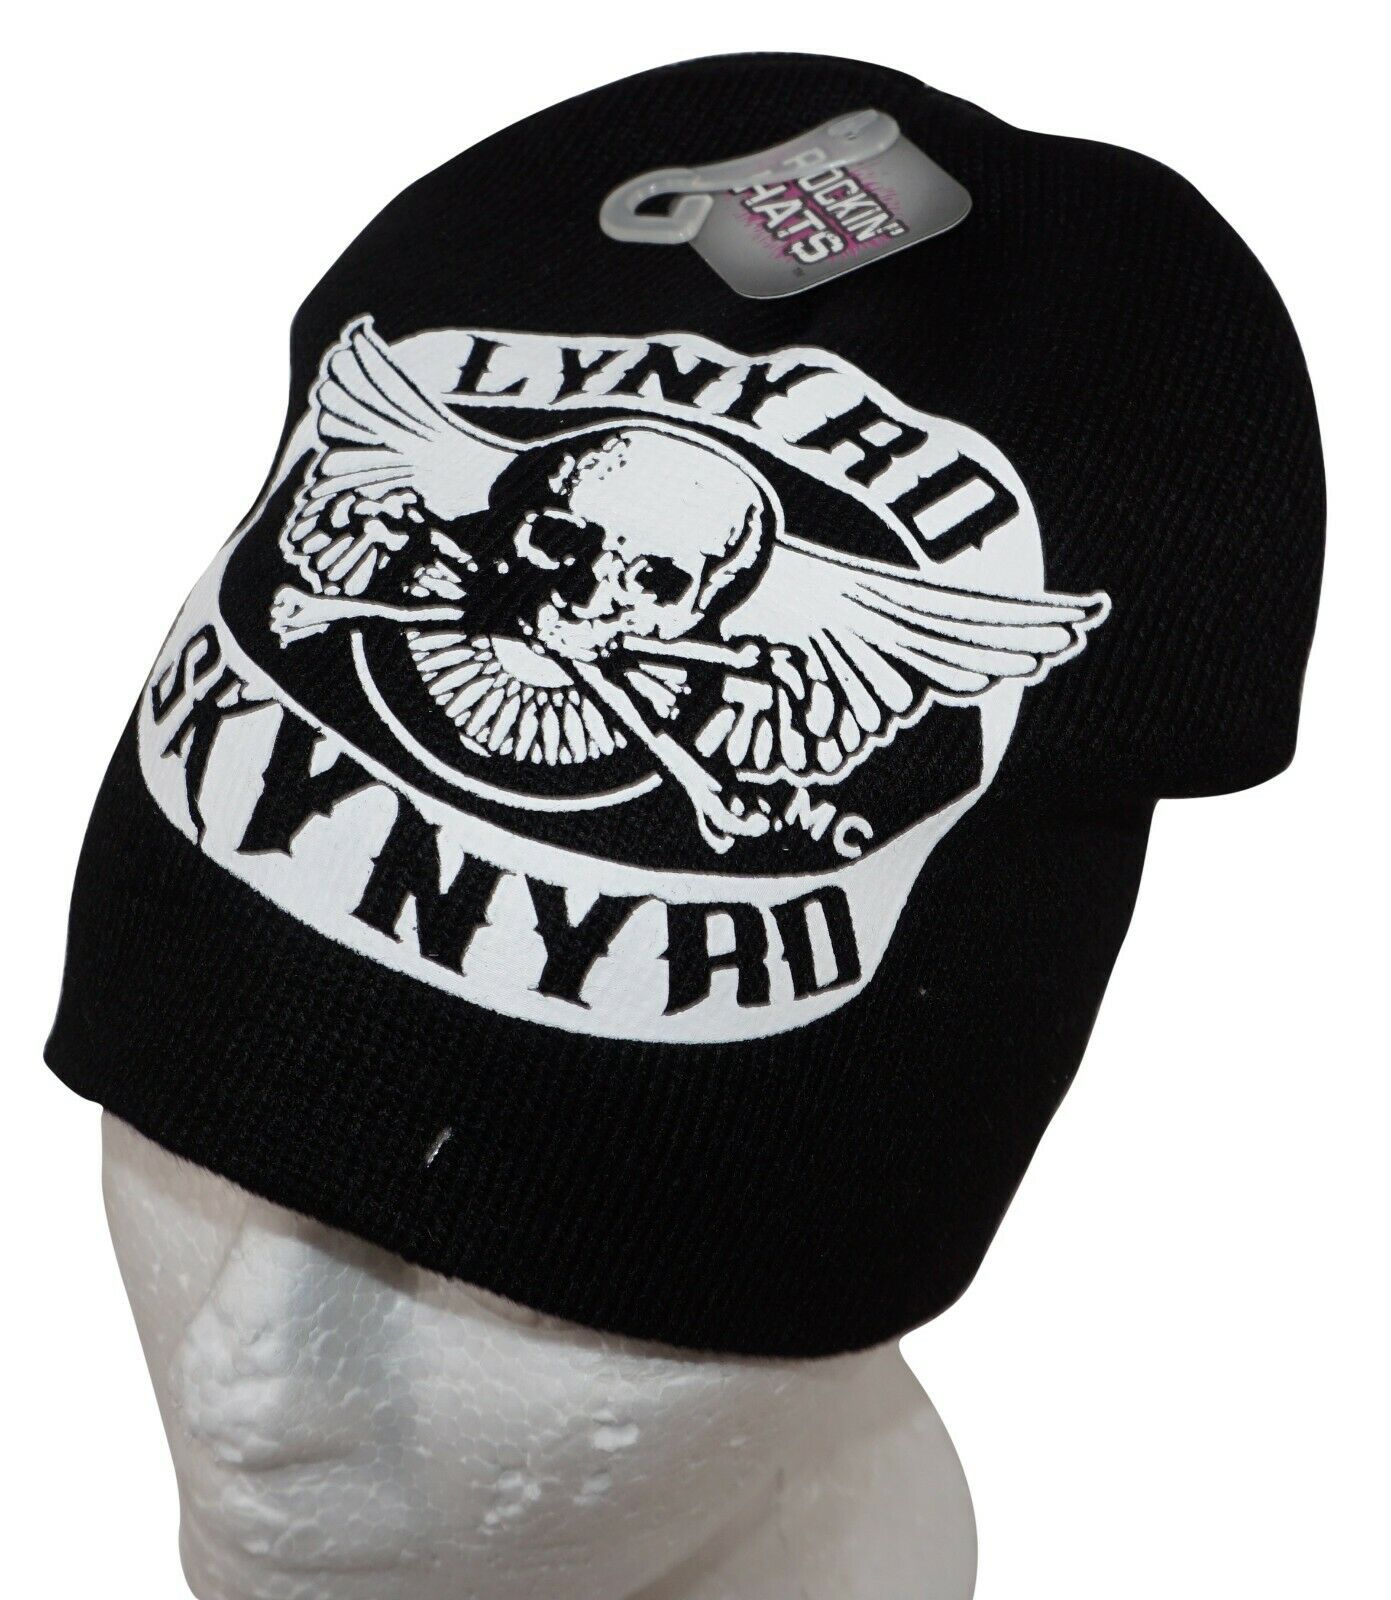 LYNYRD SKYNYRD ROCK BAND - KNIT BEANIE BLACK CAP HAT NEW 2010